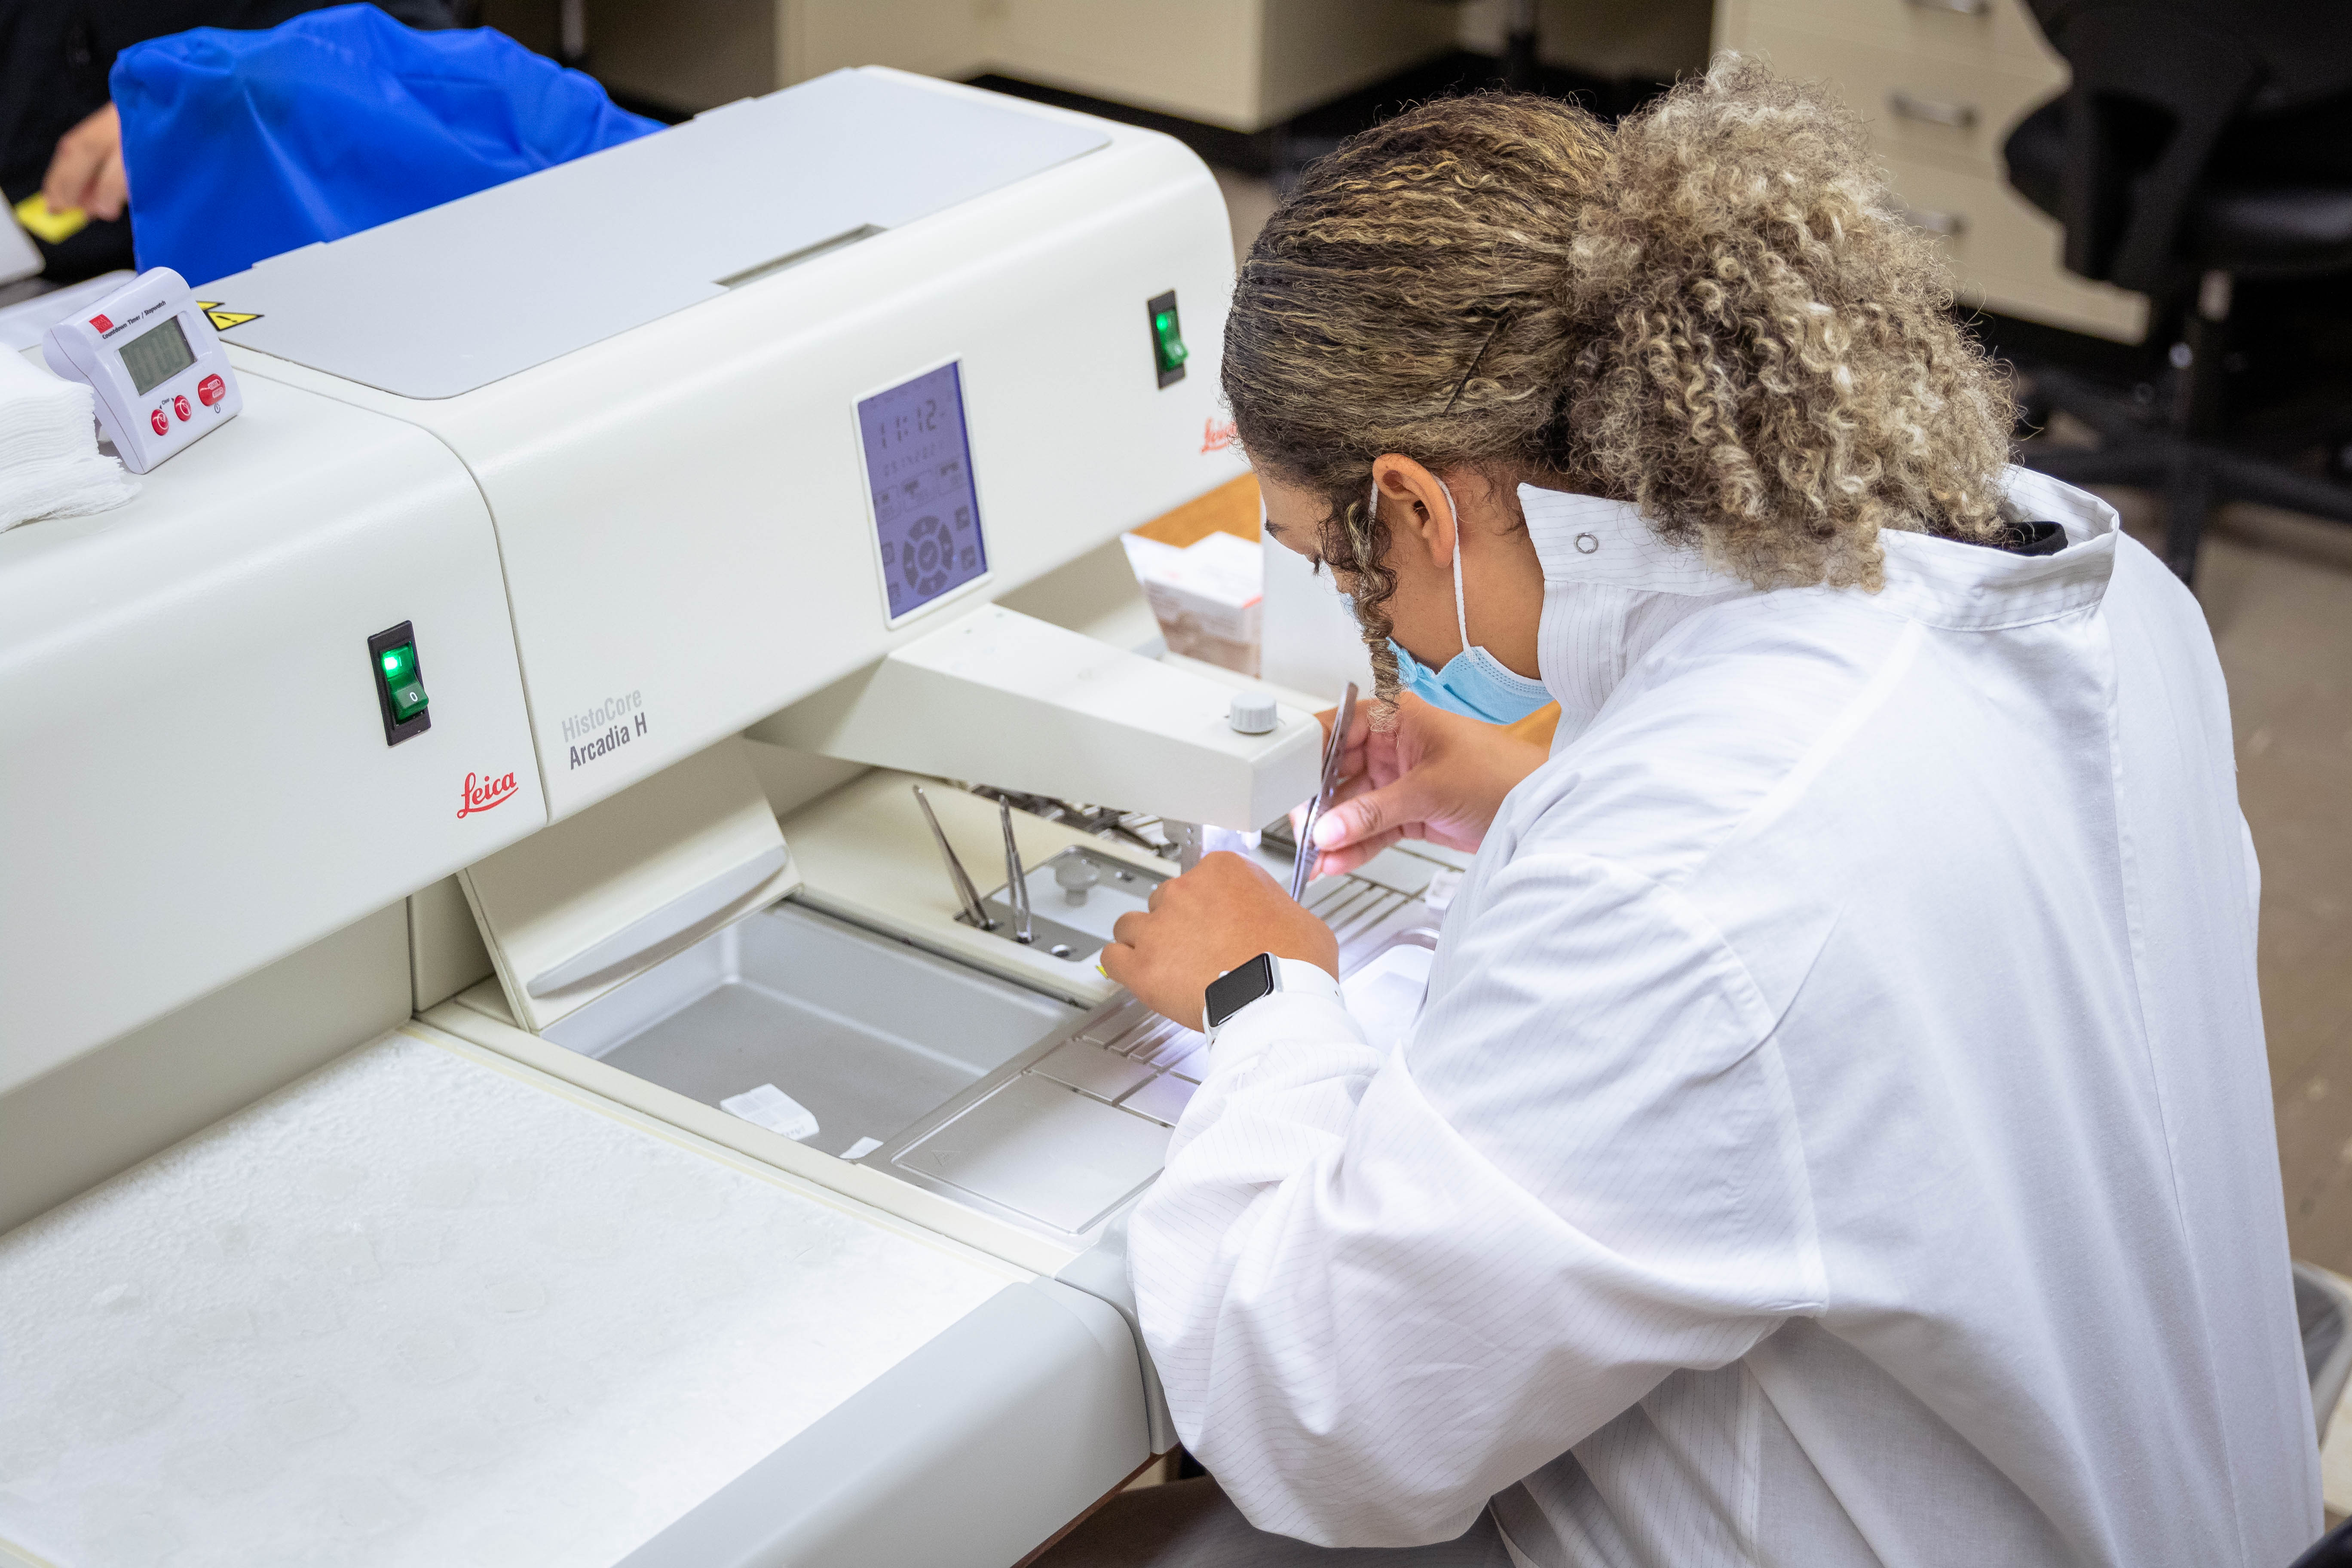 Female student works in biomedical laboratory diagnostics lab on equipment